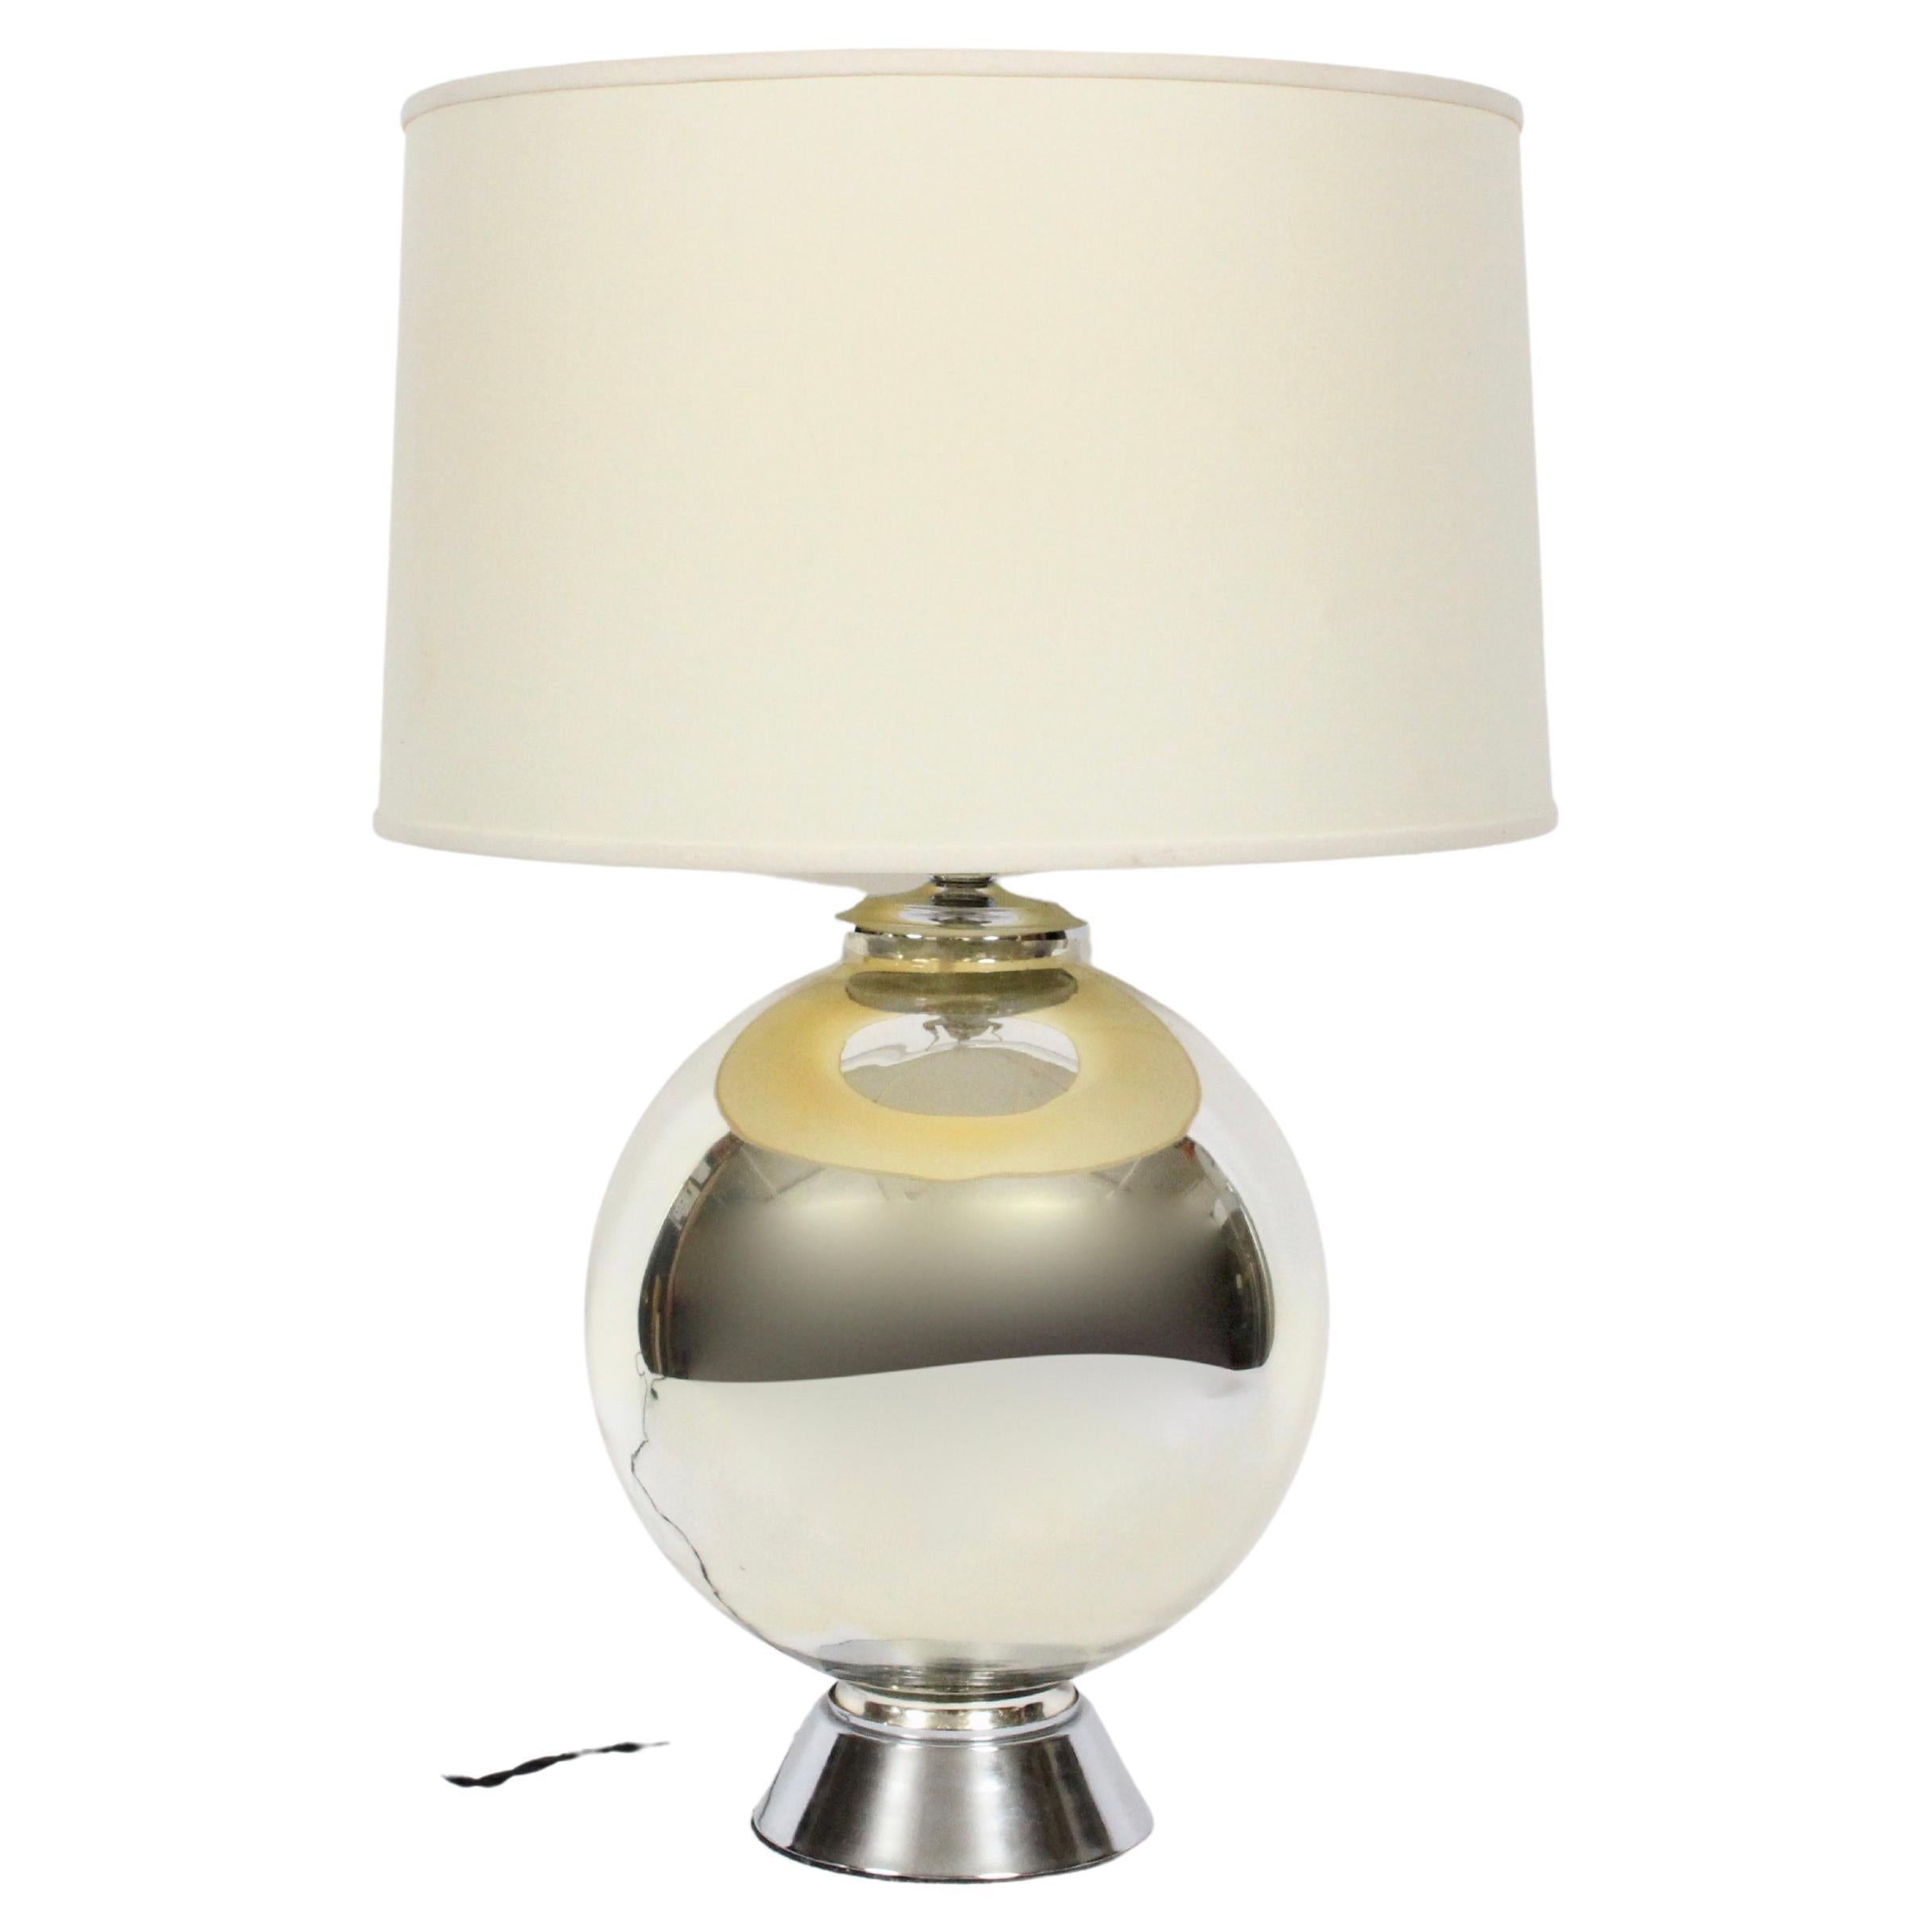 Chapman Co. Mercury Glass Ball Table Lamp, 1960's For Sale 6